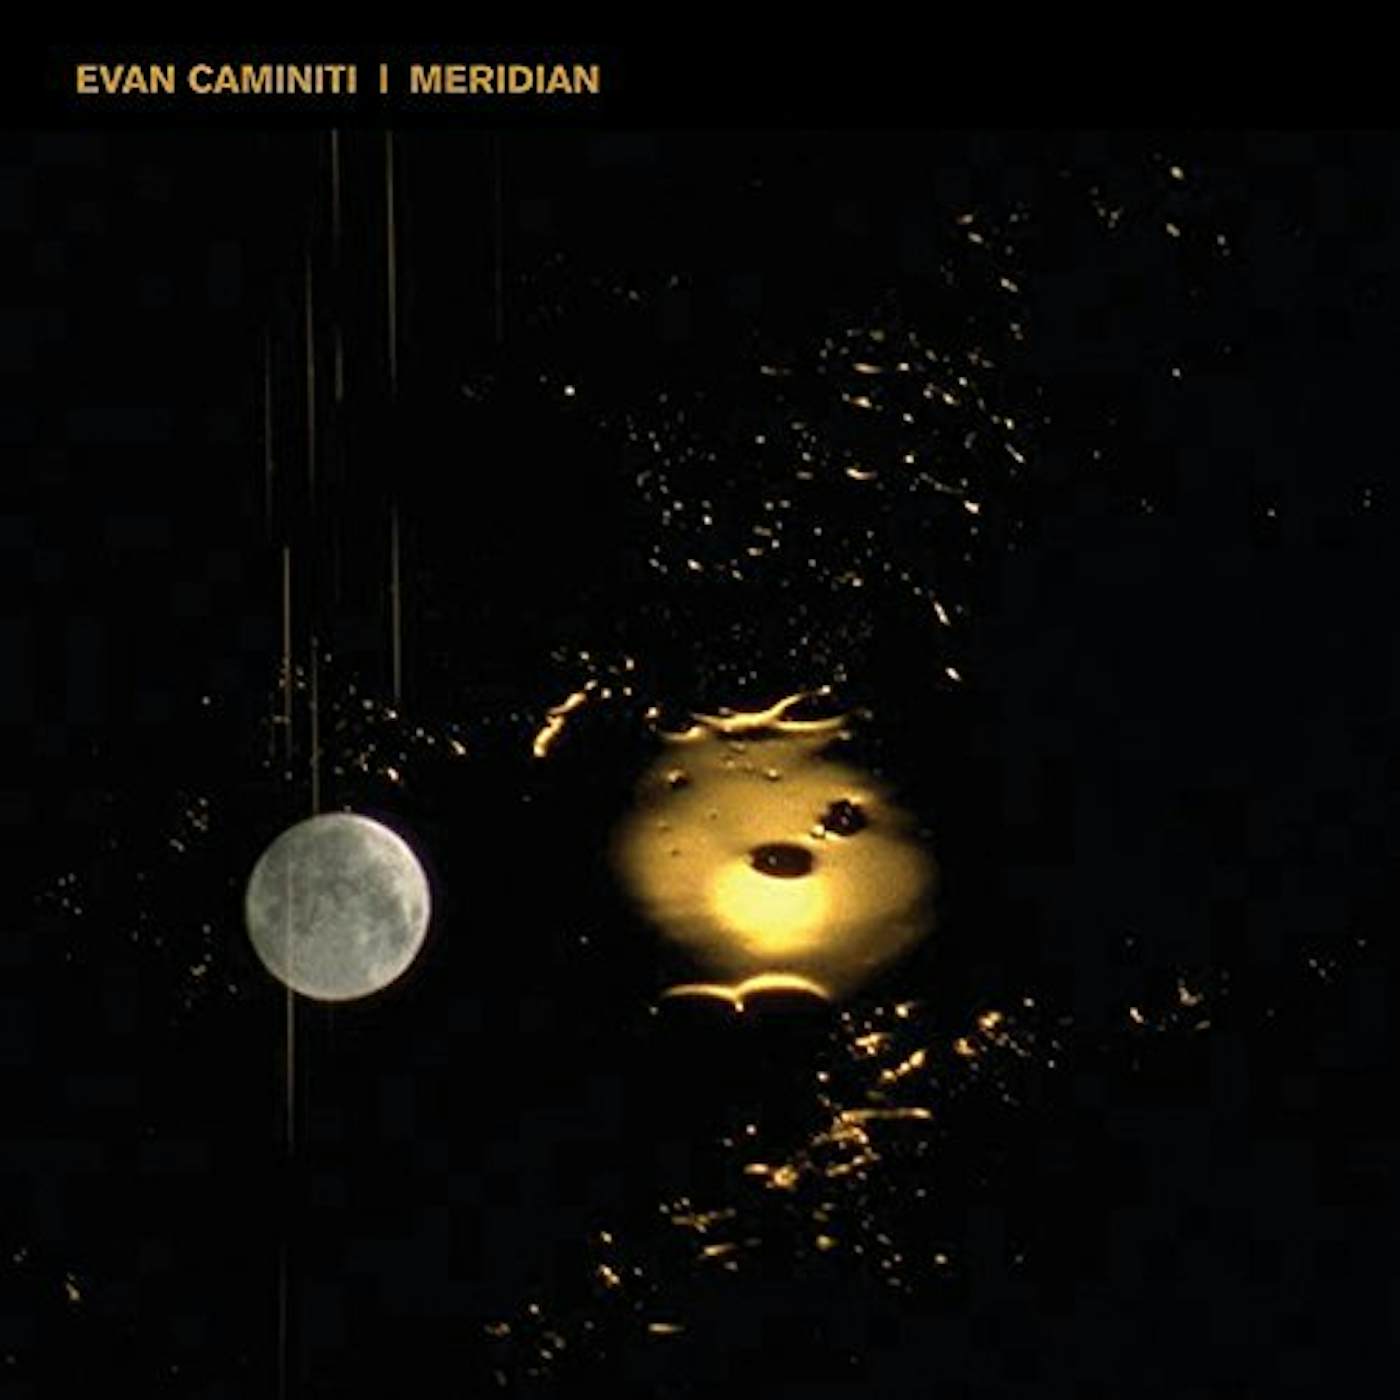 Evan Caminiti Meridian Vinyl Record